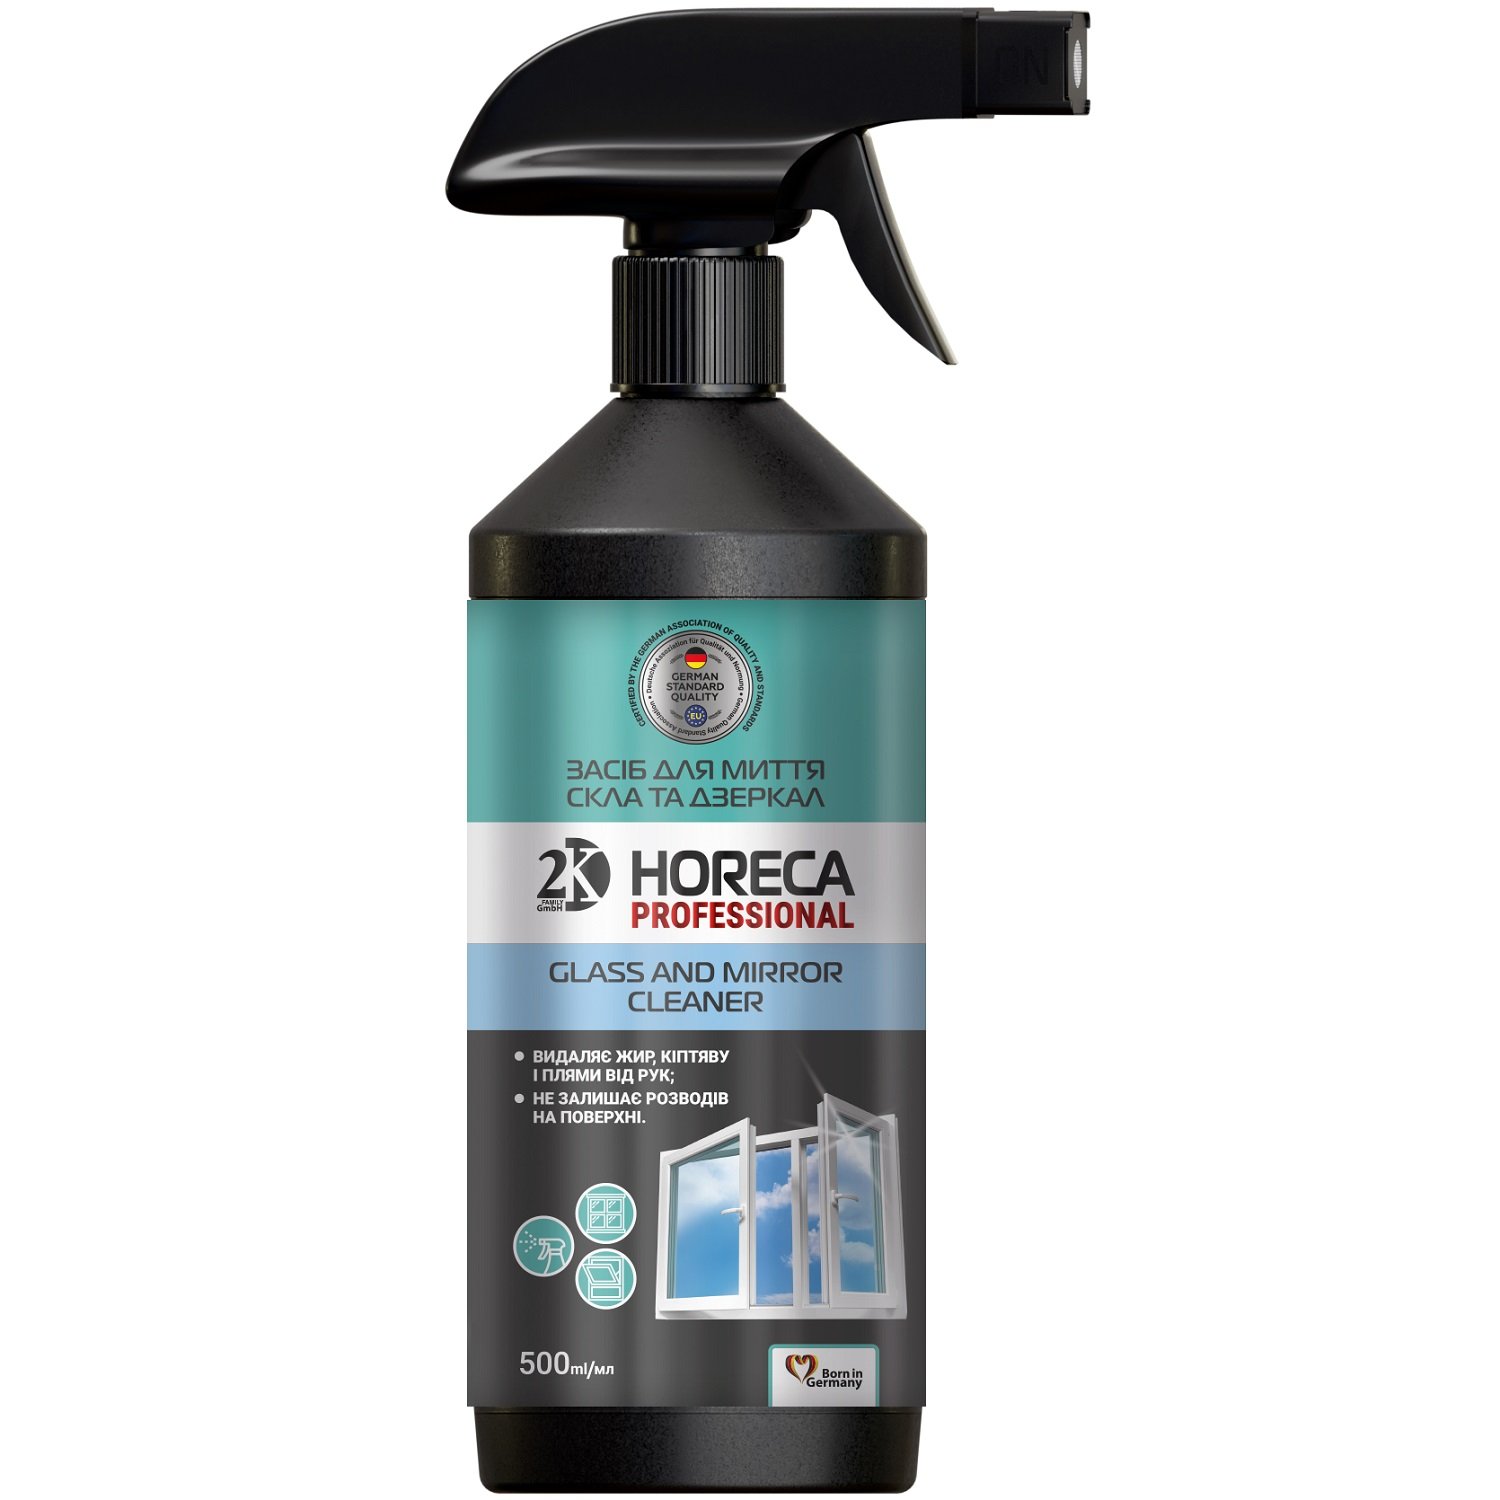 Засіб для миття скла та дзеркал 2K Horeca Professional, 500 мл - фото 1